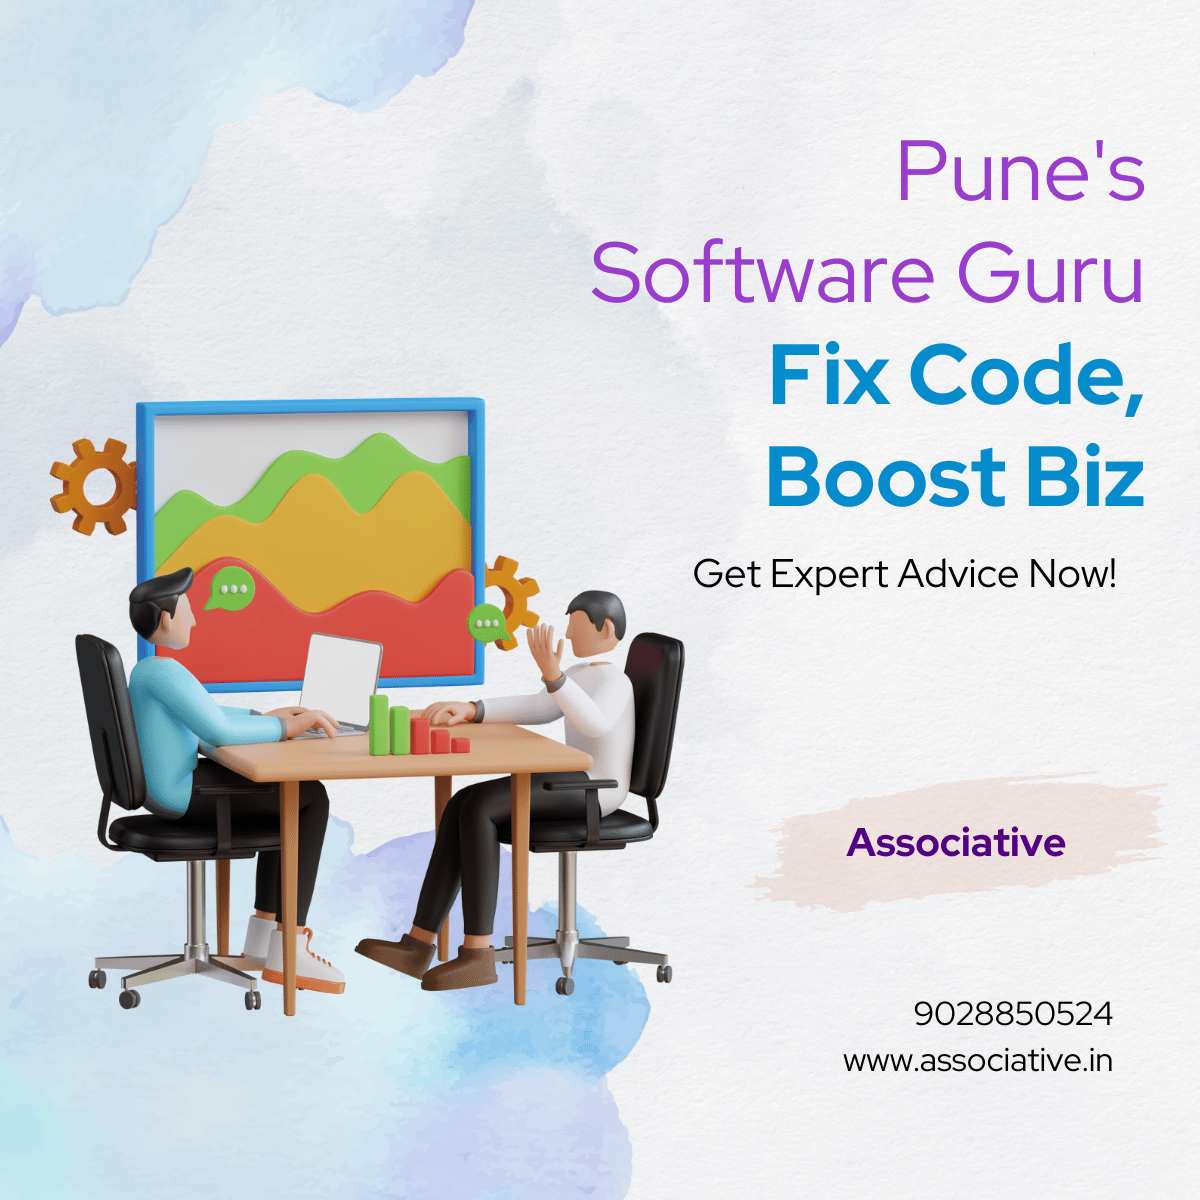 Pune's Software Guru: Fix Code, Boost Biz - Get Expert Advice Now!